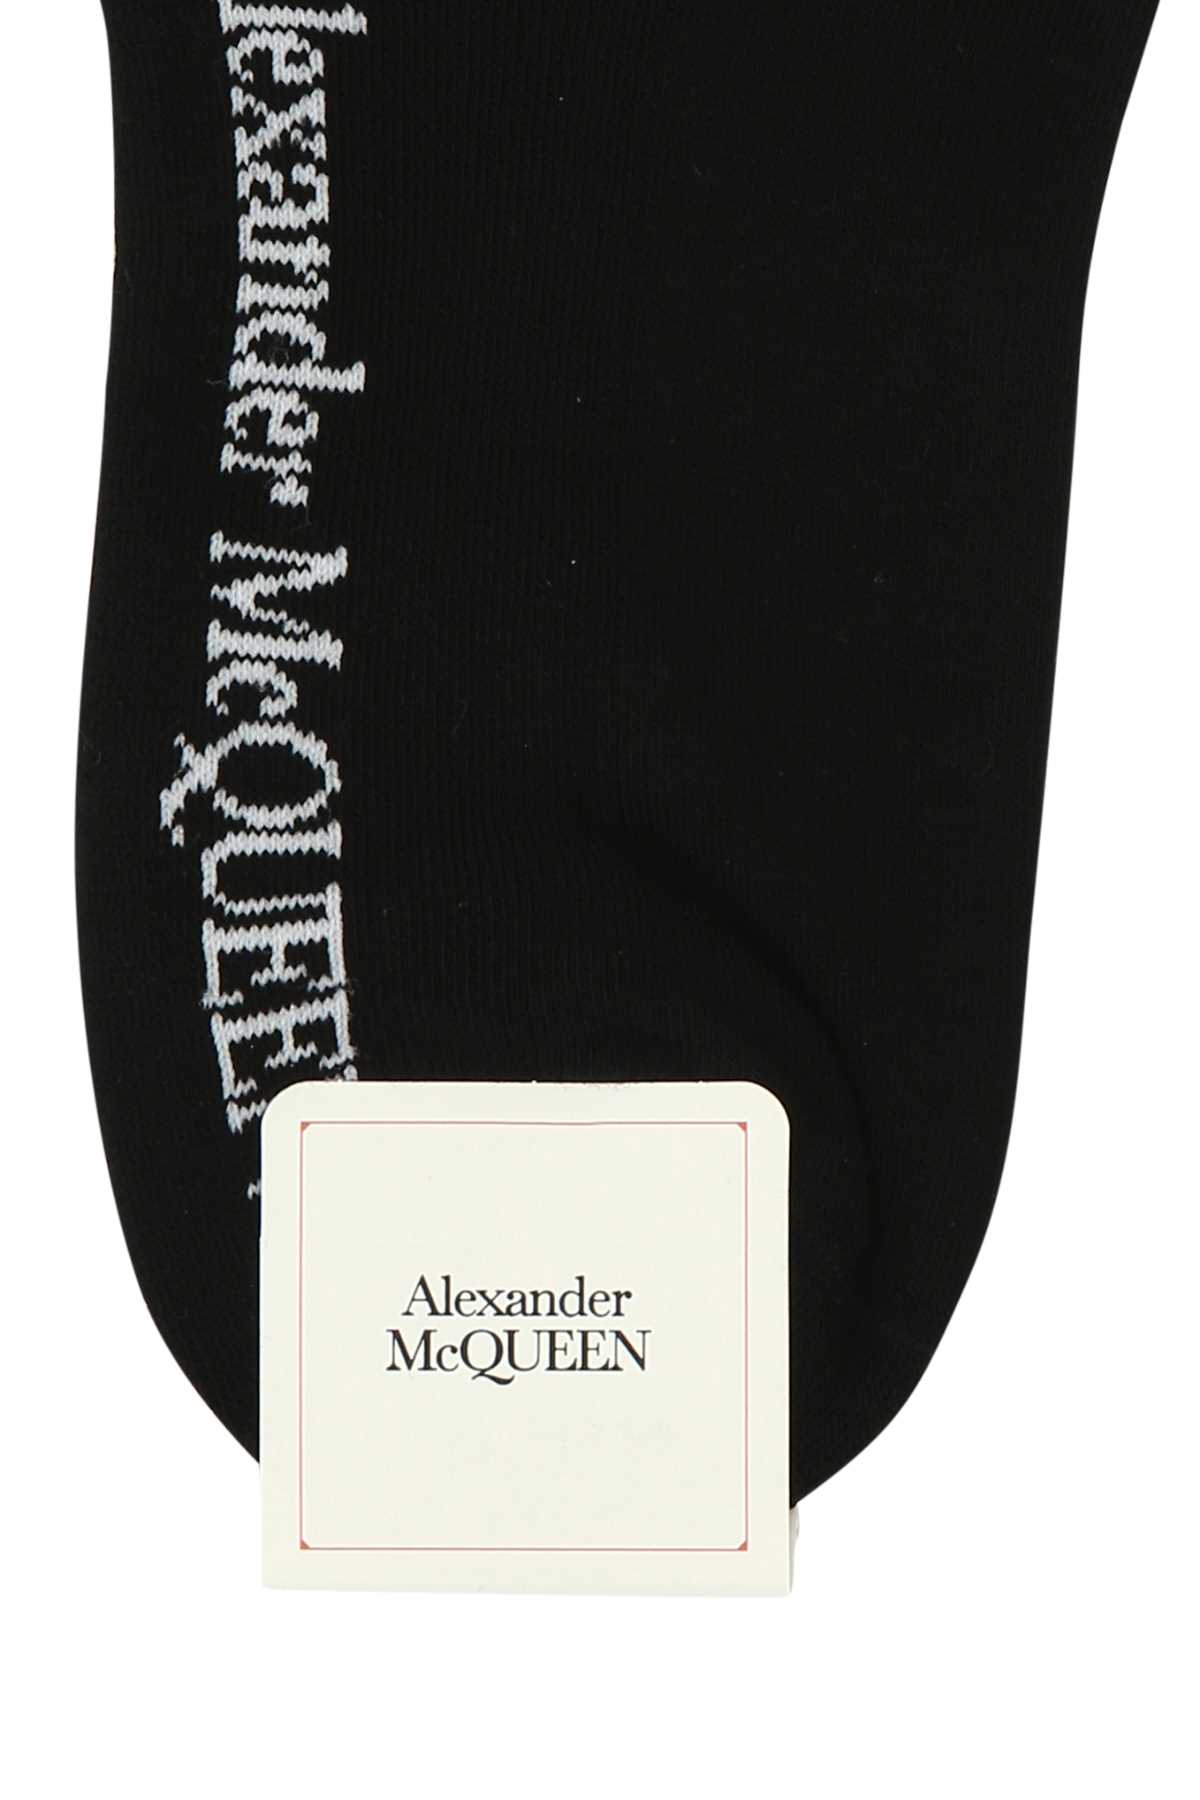 ALEXANDER MCQUEEN BLACK STRETCH COTTON BLEND SOCKS